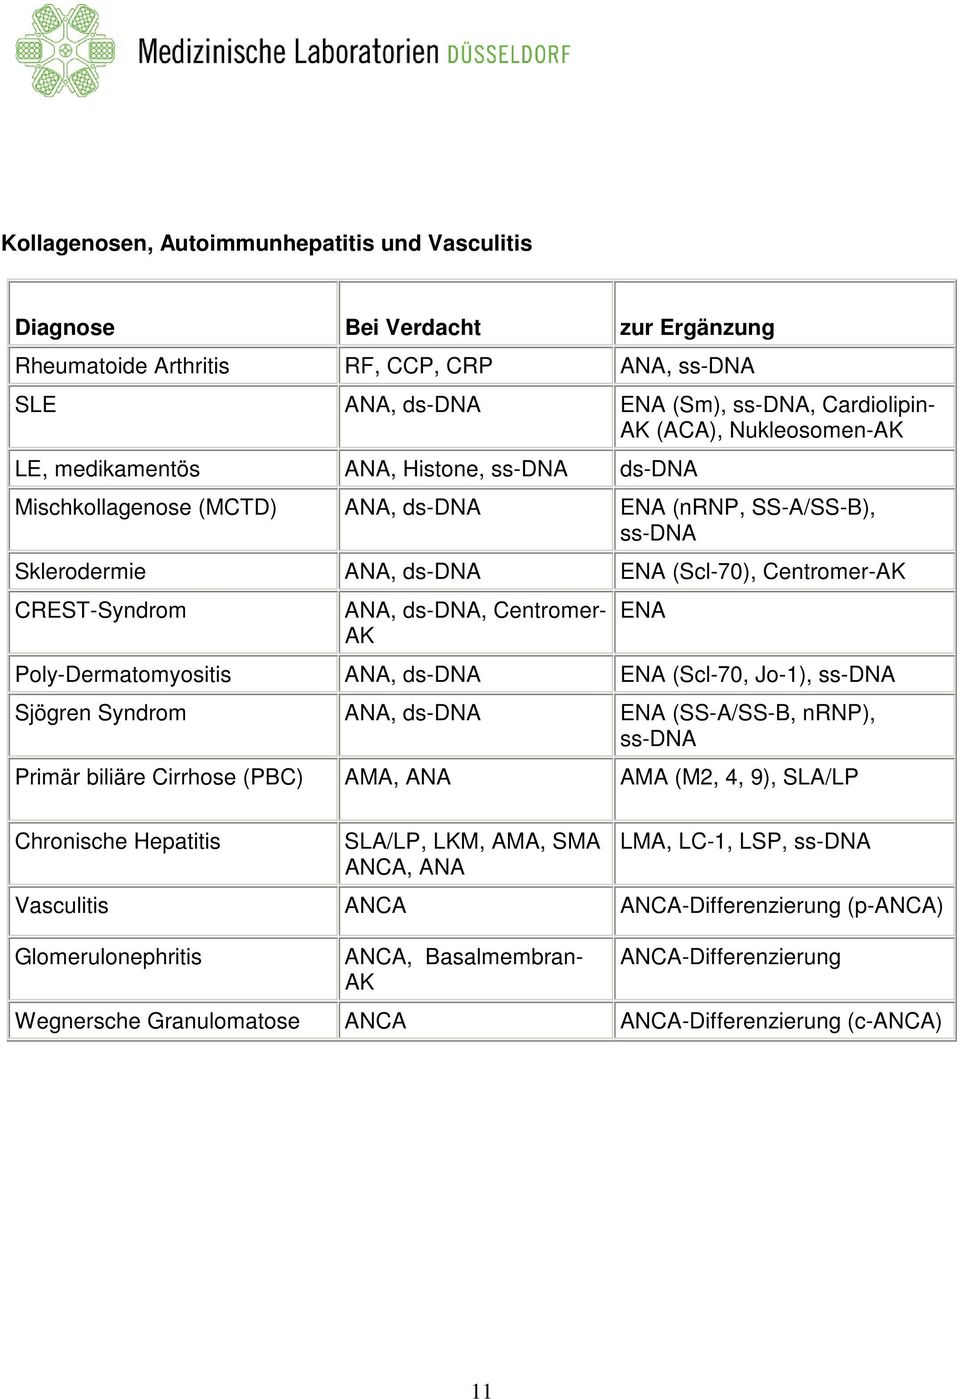 ds-dna, Centromer- AK ENA Poly-Dermatomyositis ANA, ds-dna ENA (Scl-70, Jo-1), ss-dna Sjögren Syndrom ANA, ds-dna ENA (SS-A/SS-B, nrnp), ss-dna Primär biliäre Cirrhose (PBC) AMA, ANA AMA (M2, 4, 9),